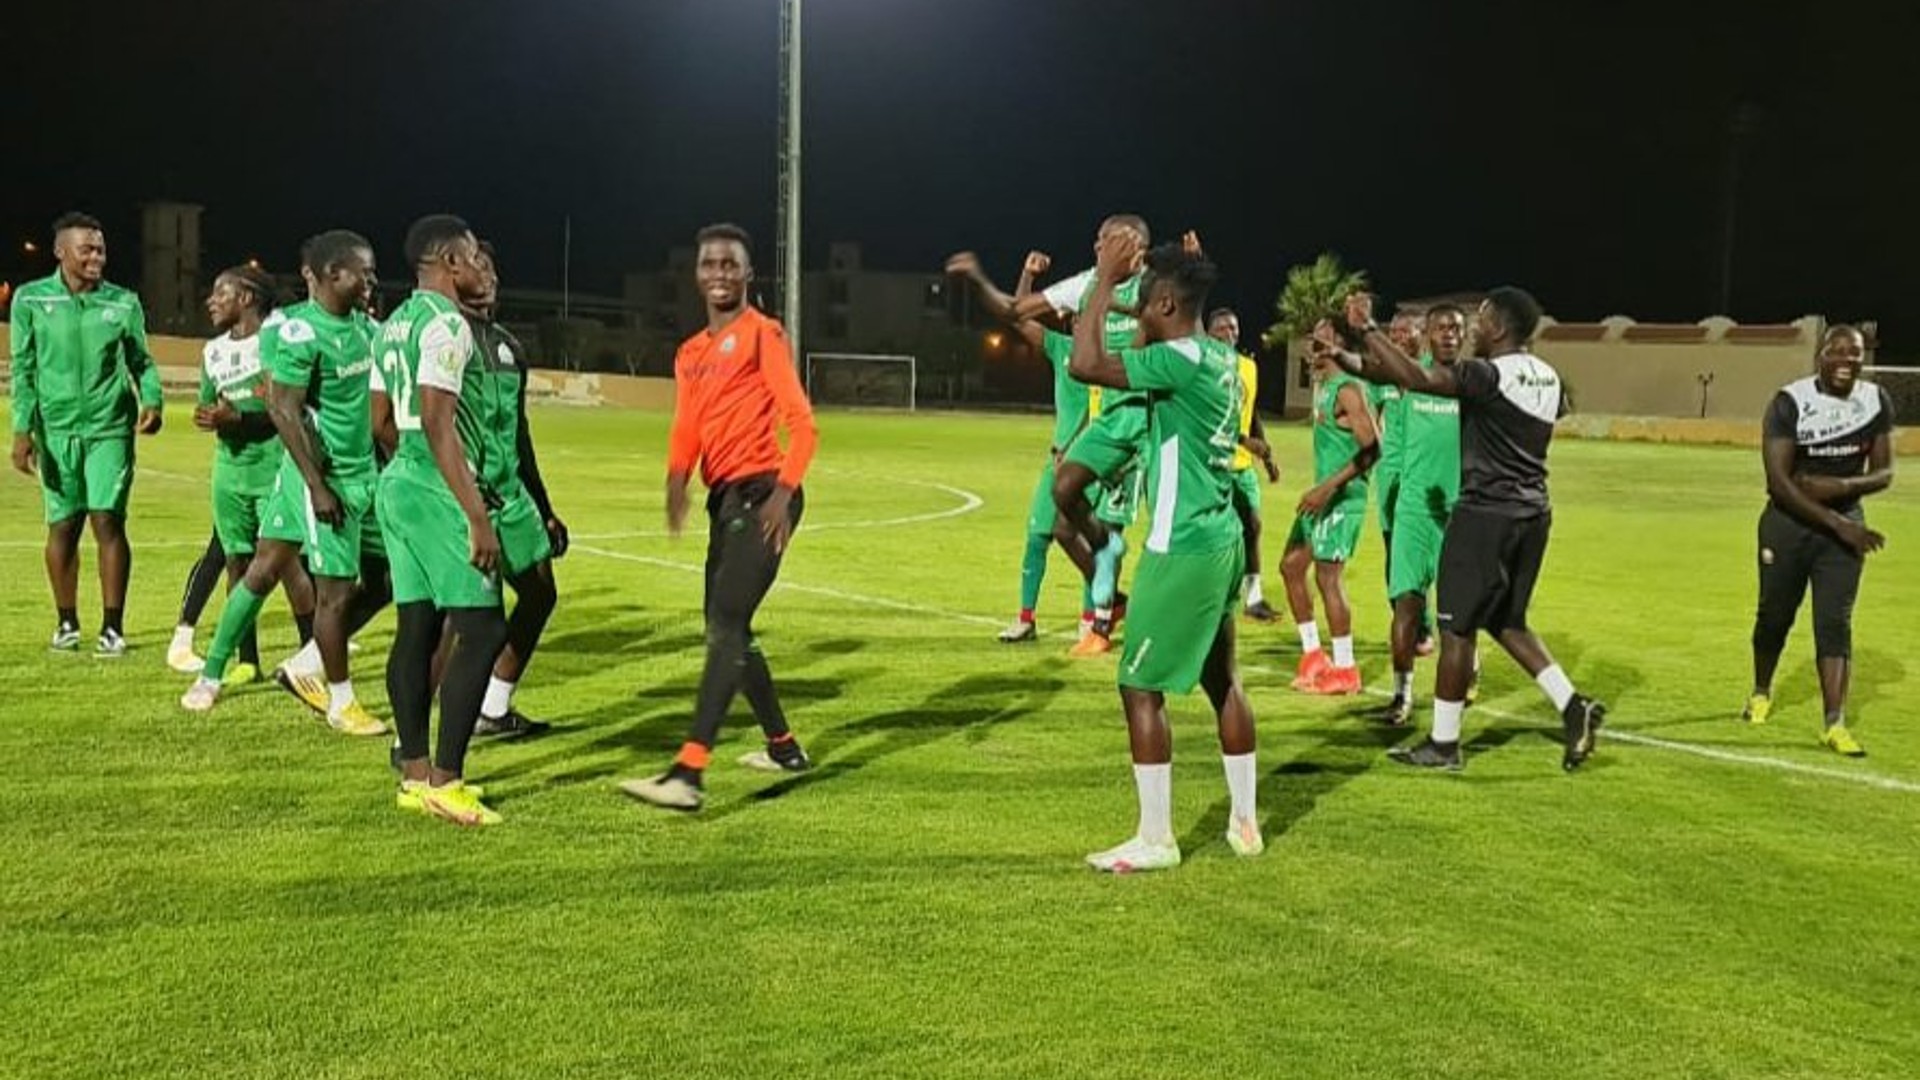 Caf Confederation Cup: Omondi and key players for Gor Mahia against Al-Ahly Merowe